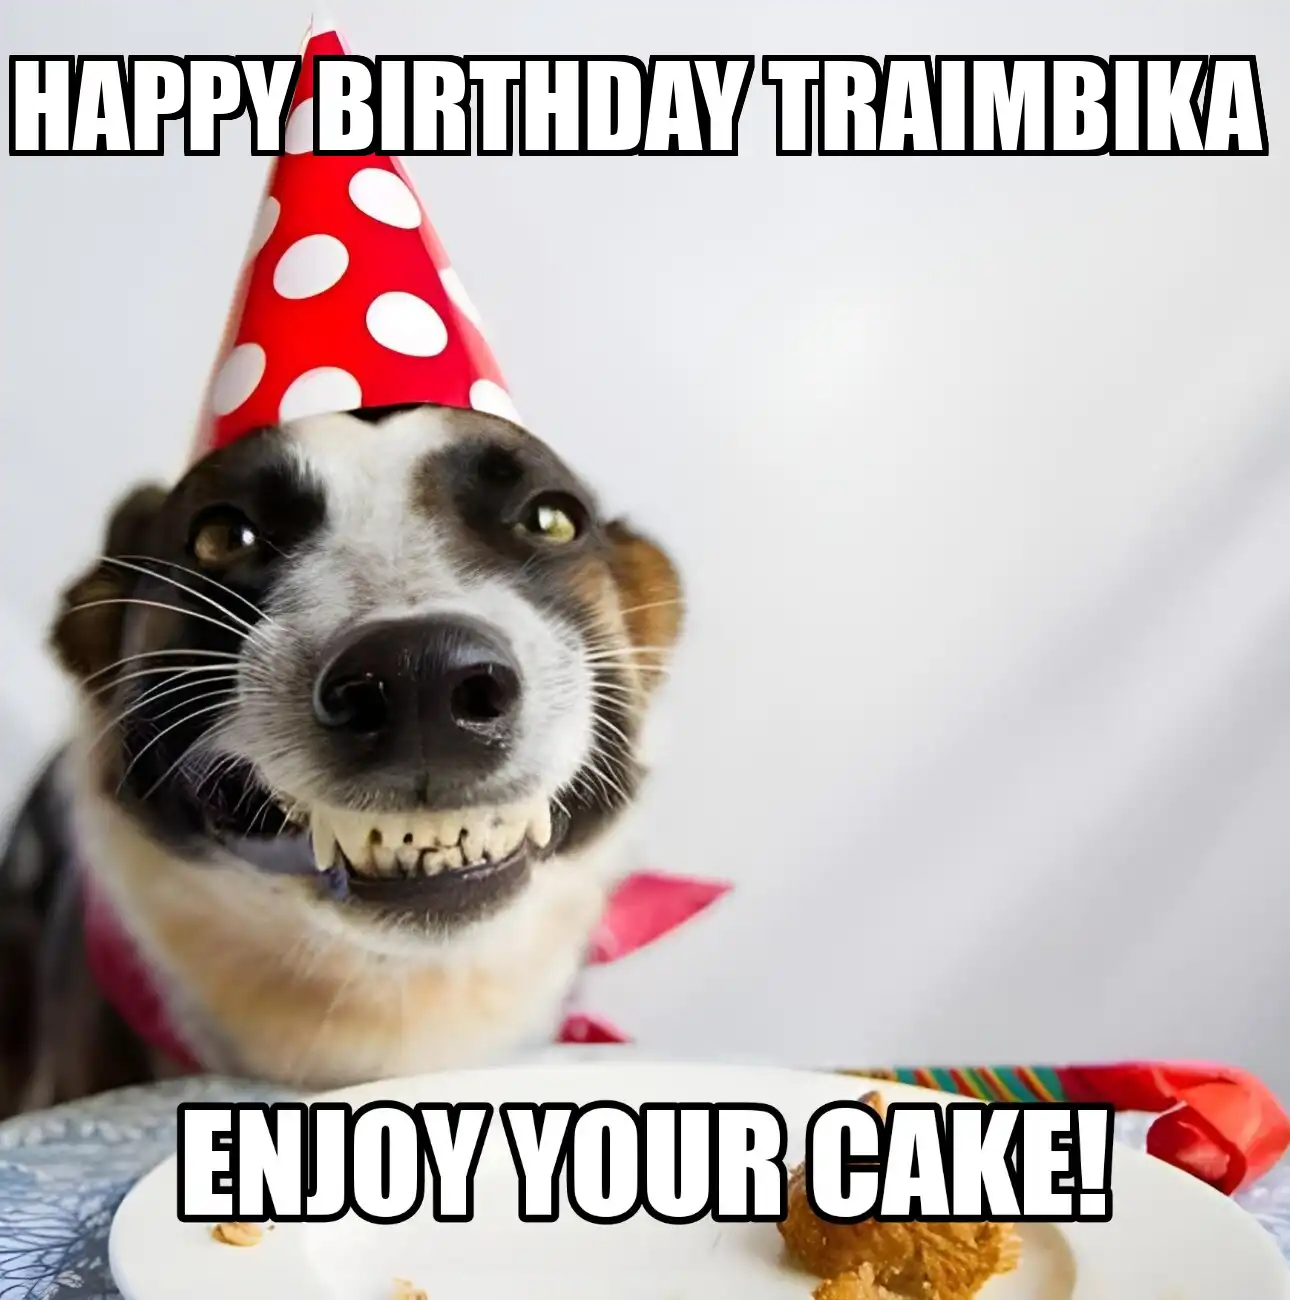 Happy Birthday Traimbika Enjoy Your Cake Dog Meme